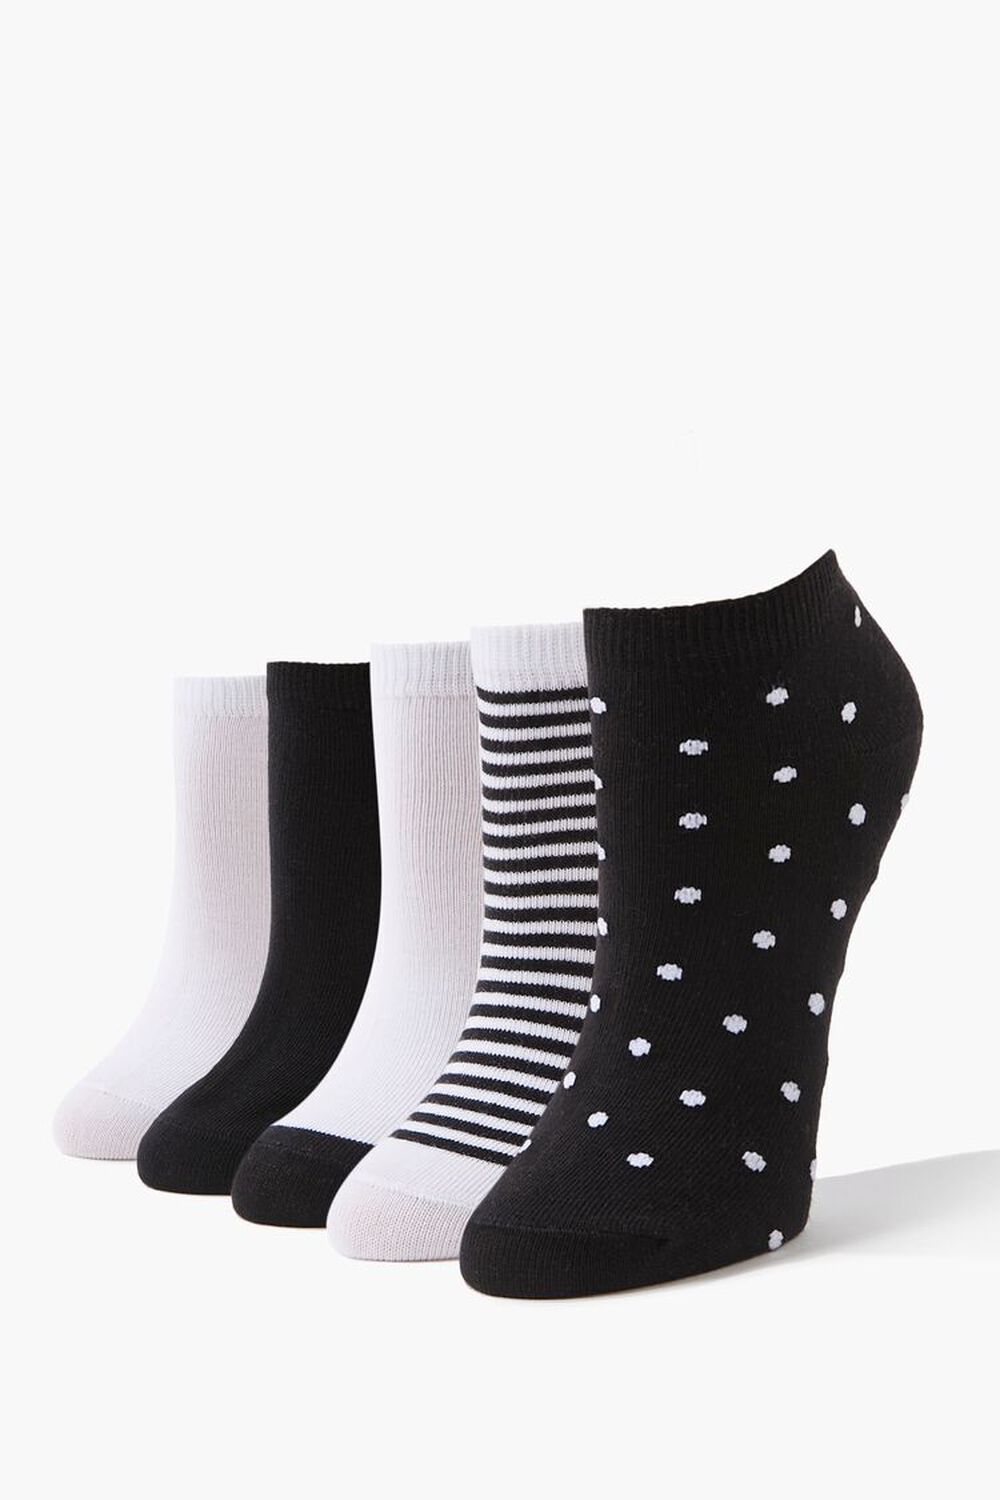 Striped & Polka Dot Sock Set - 5 pack, image 1